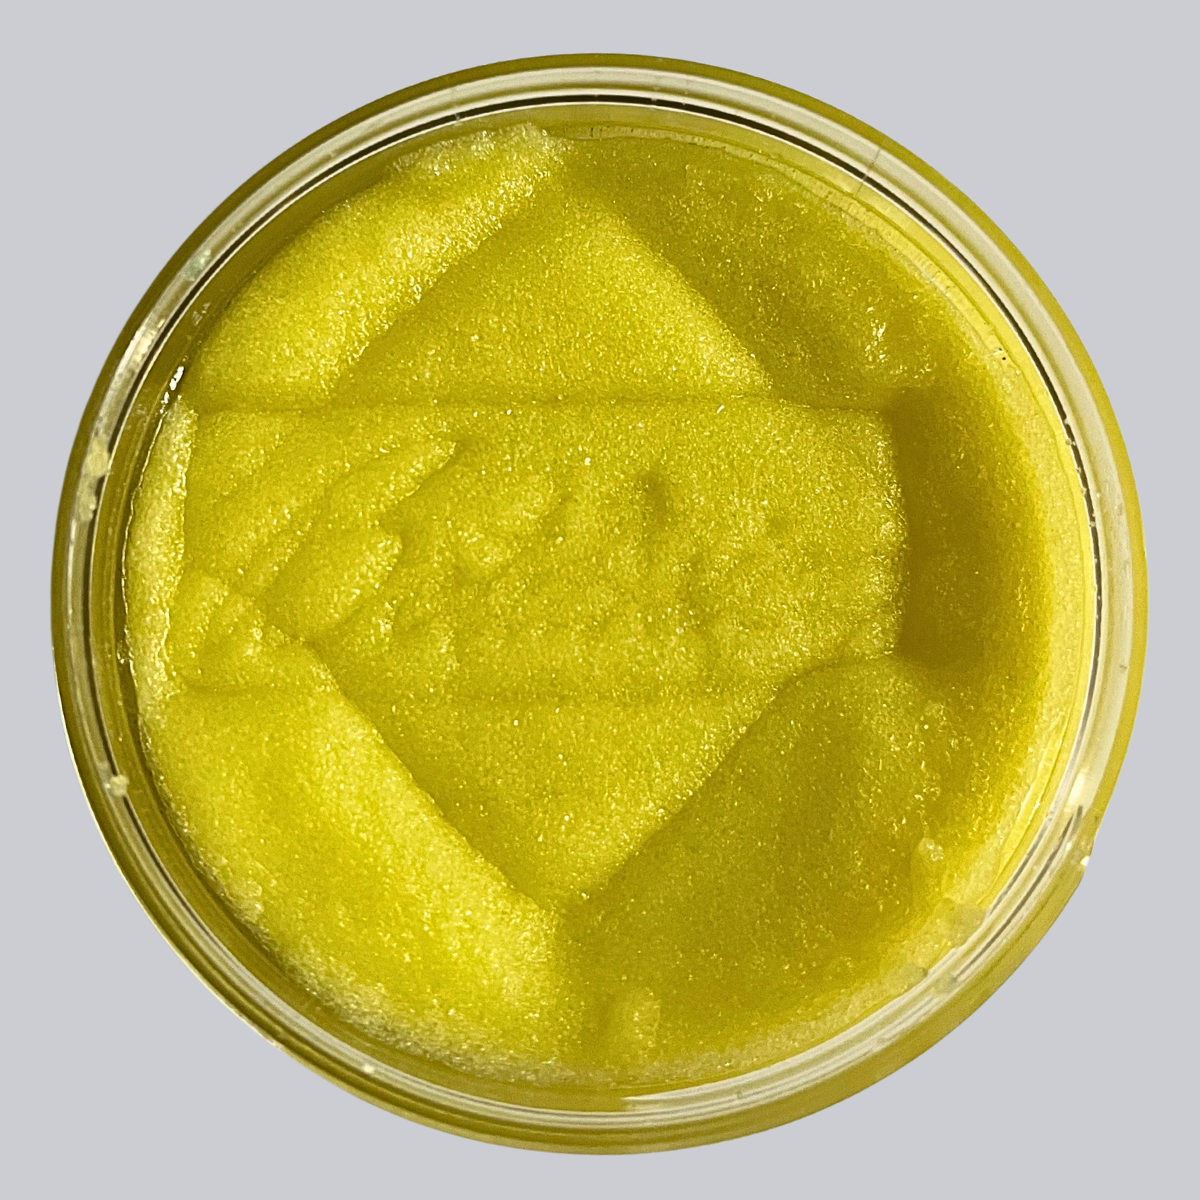 Open jar of sugar body scrub showing the texture, stamped "Botanica" AlpacaSoaps Alpaca Soaps, yellow color, Lemon Verbena